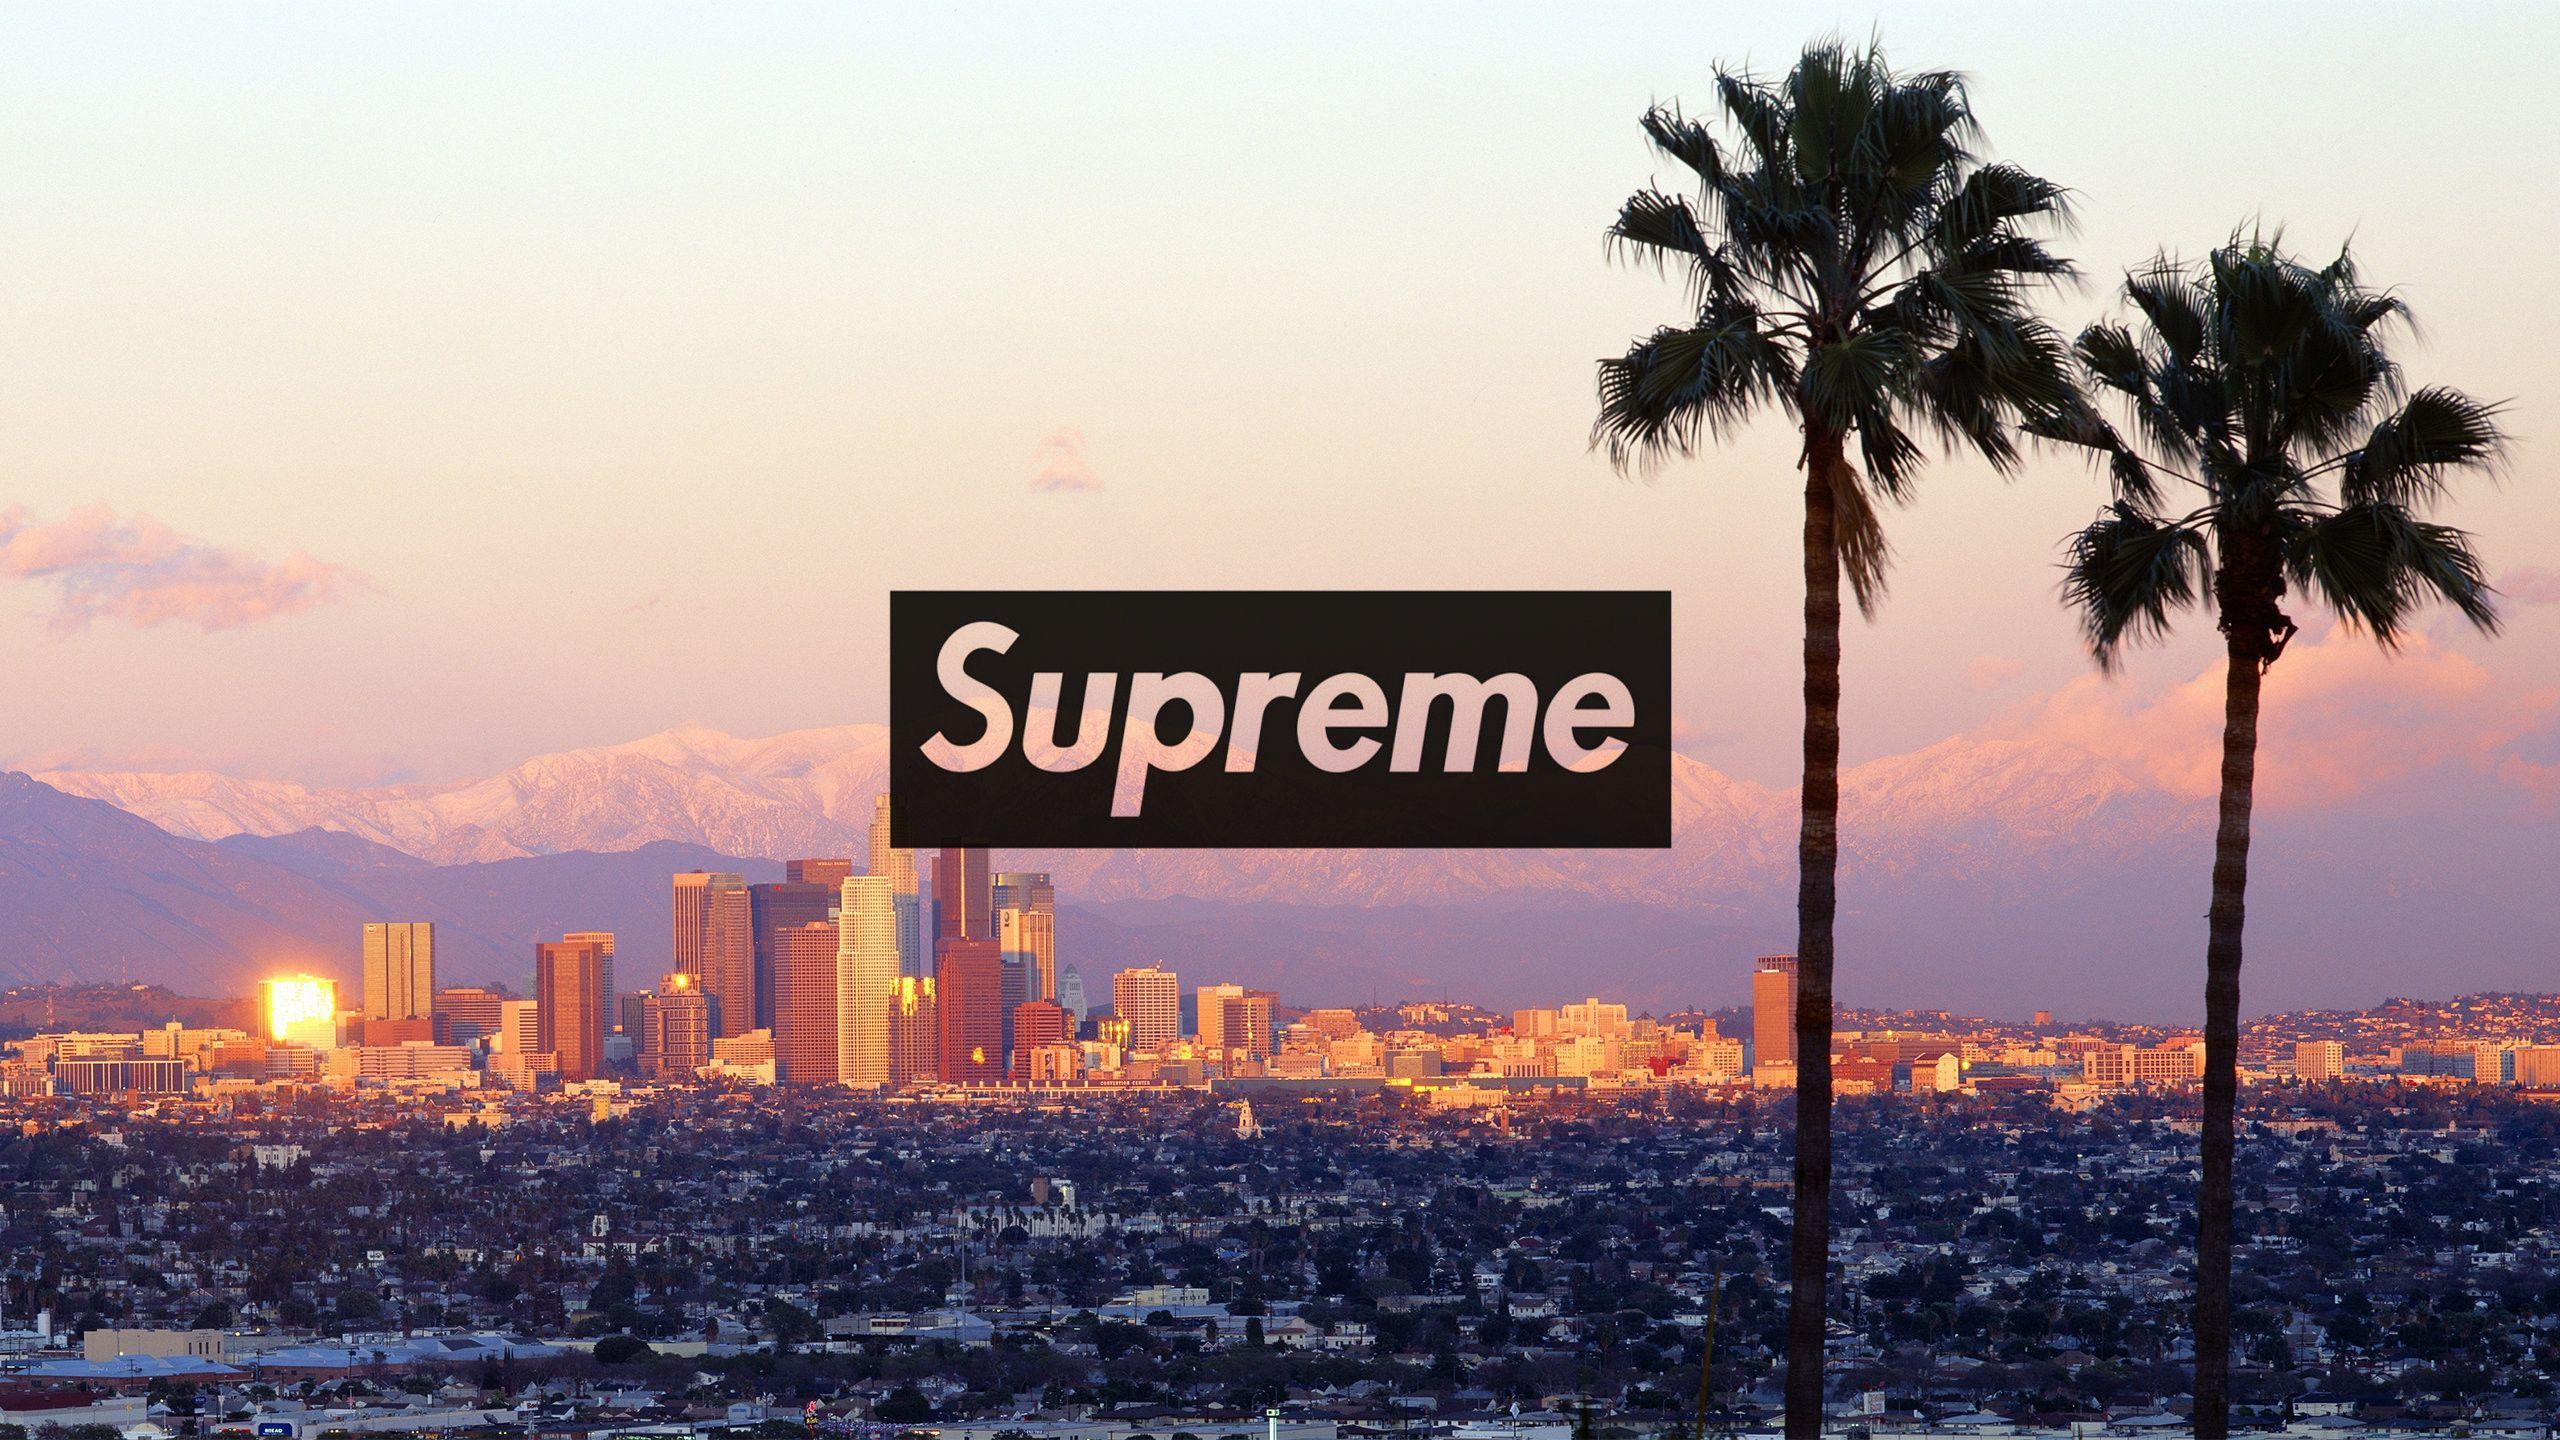 Download the Los Angeles Supreme wallpaper below